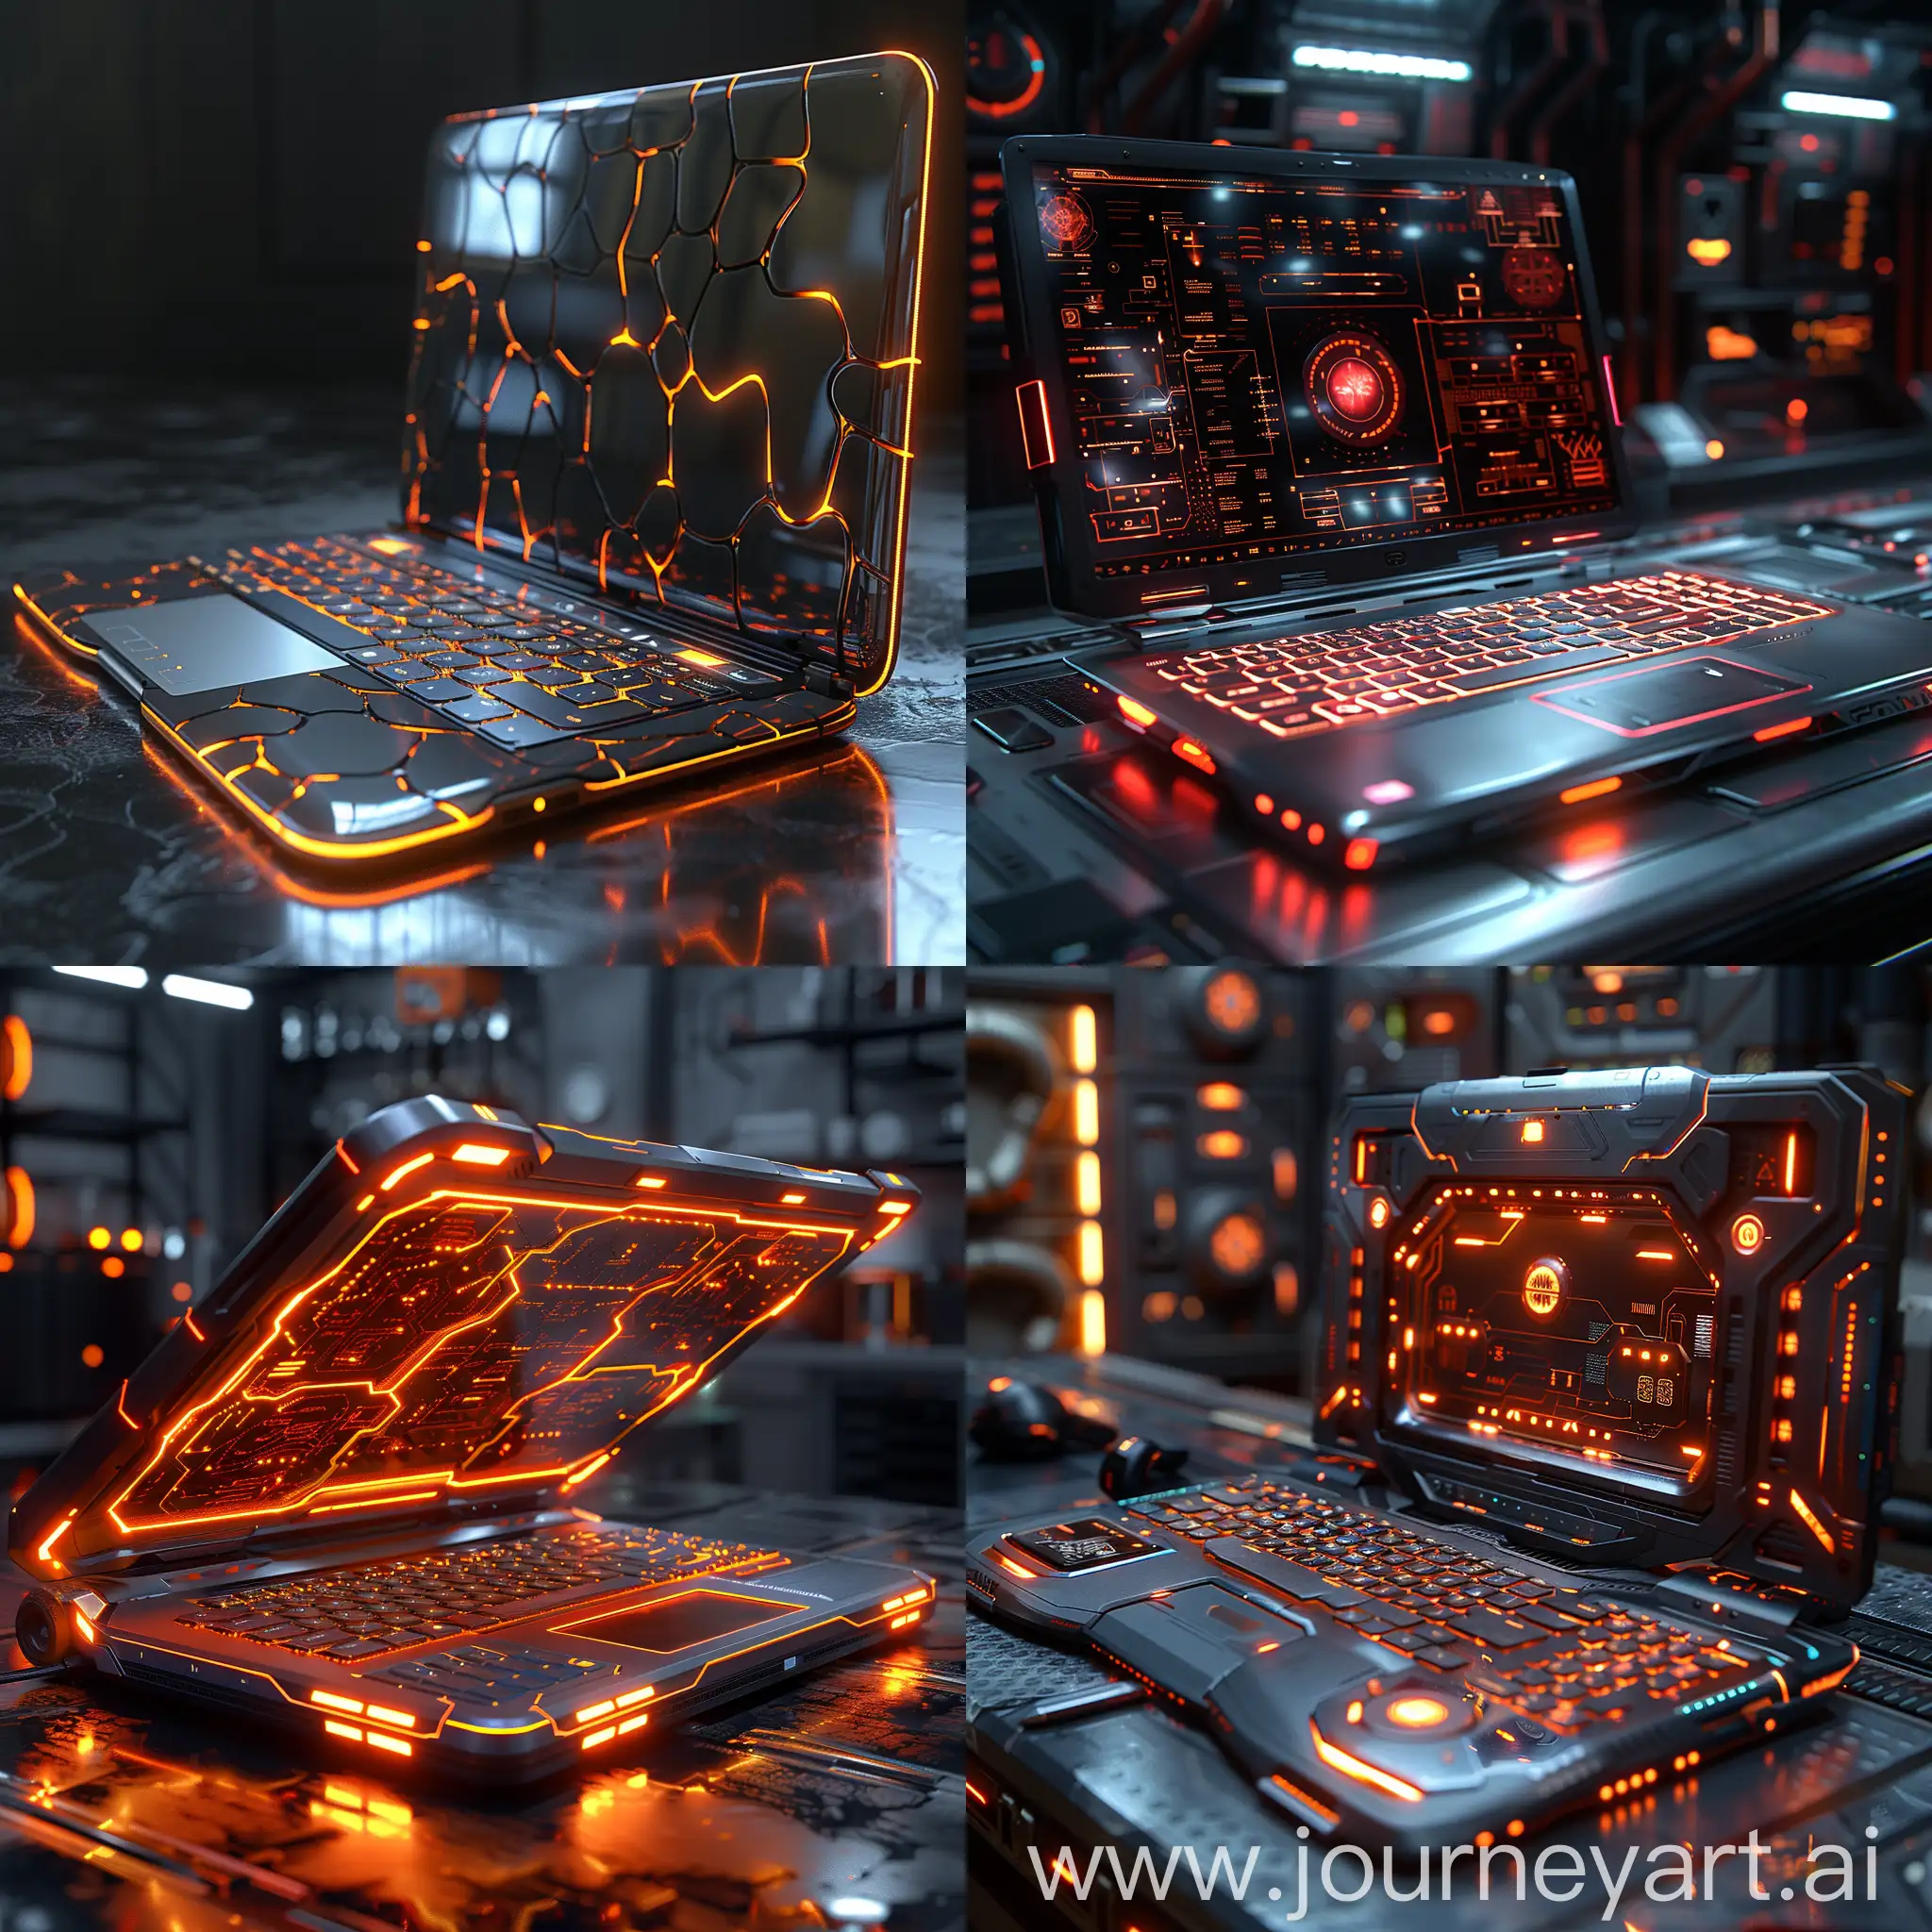 Futuristic-Bionic-Laptop-in-UltraModern-Style